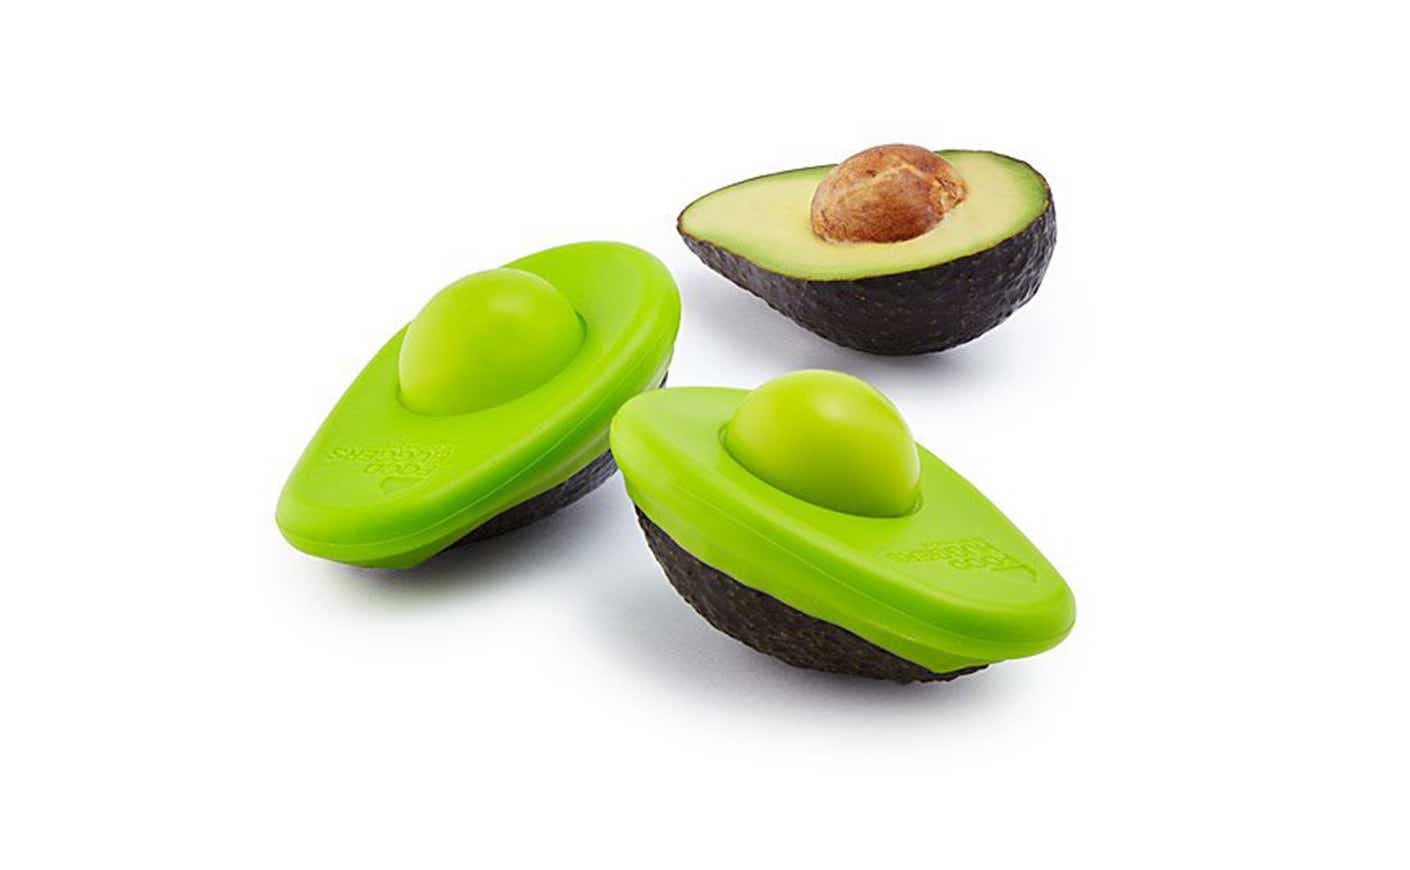 avocado food hugger - set of 2